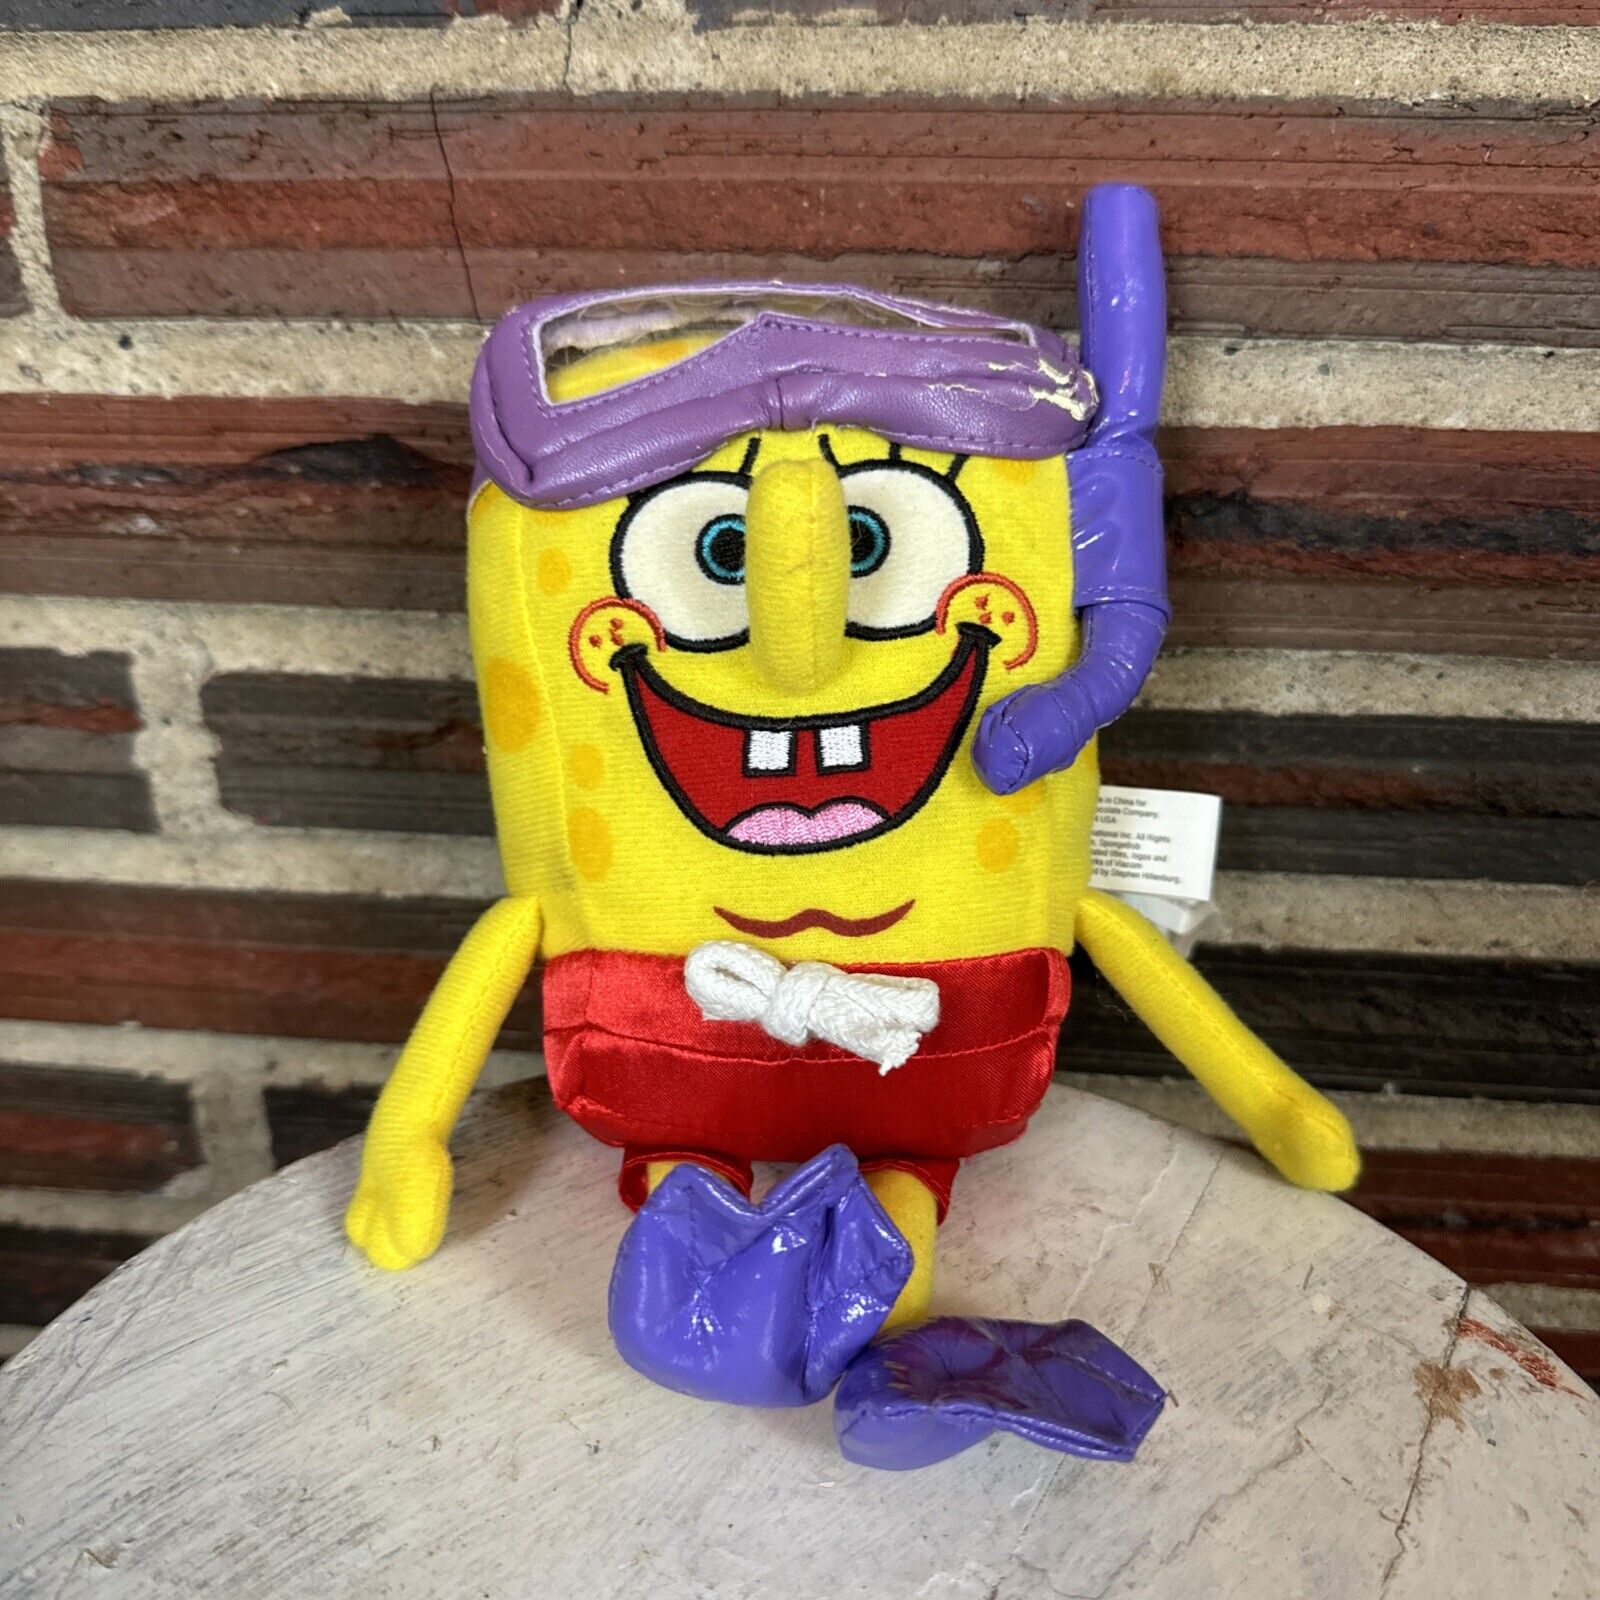 Spongebob Squarepants Viacom 2006 Yellow Plush Doll Toy Animated Character Y2K